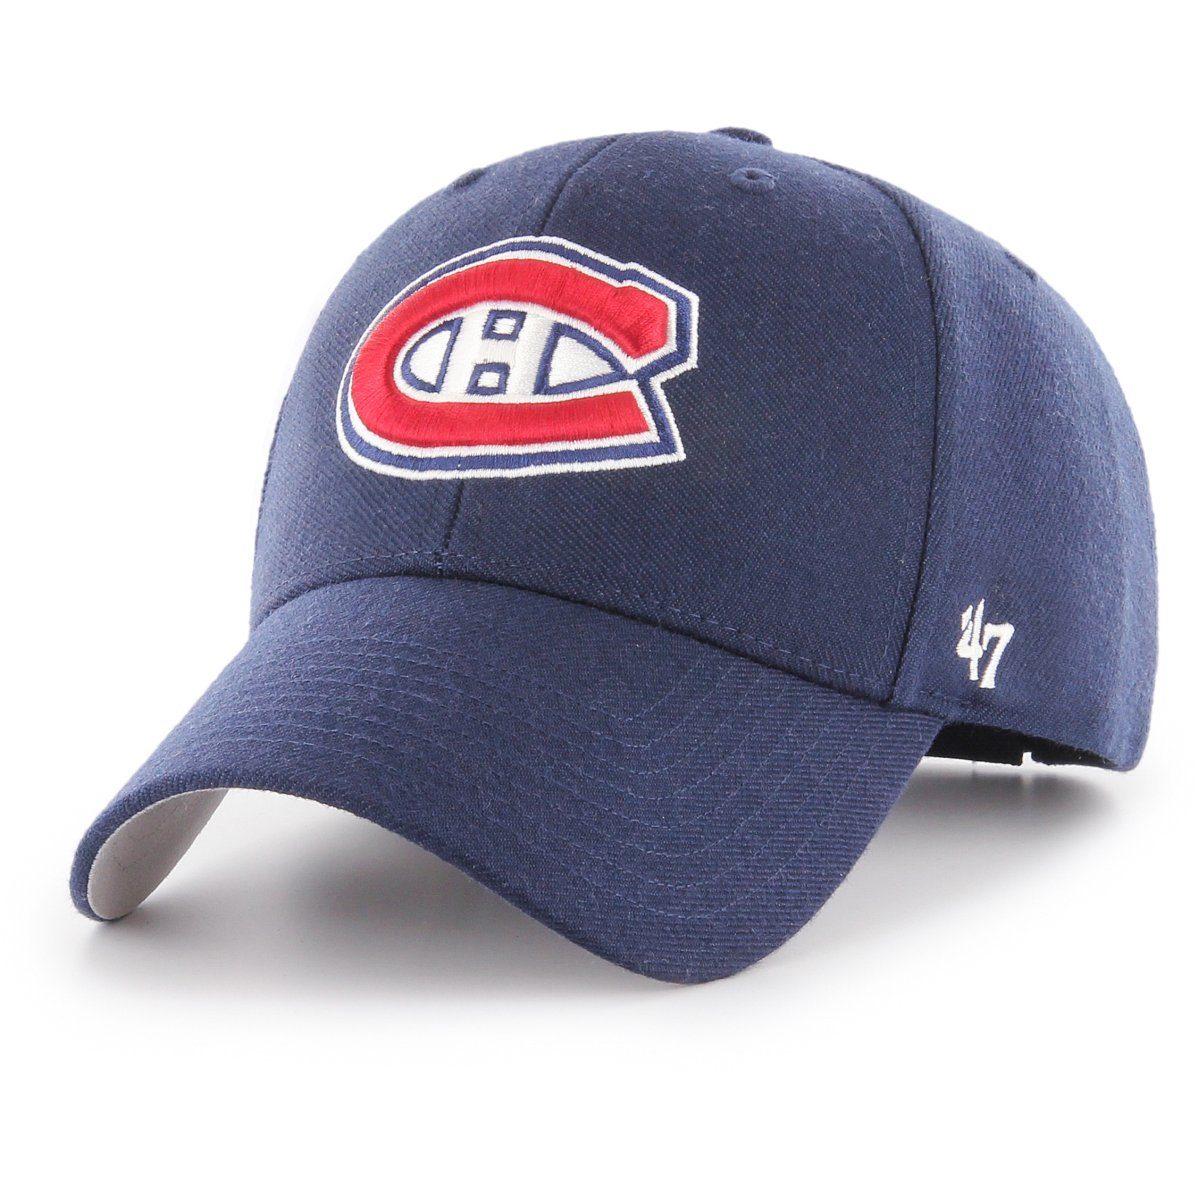 Brand '47 Baseball Cap NHL Canadians Montreal